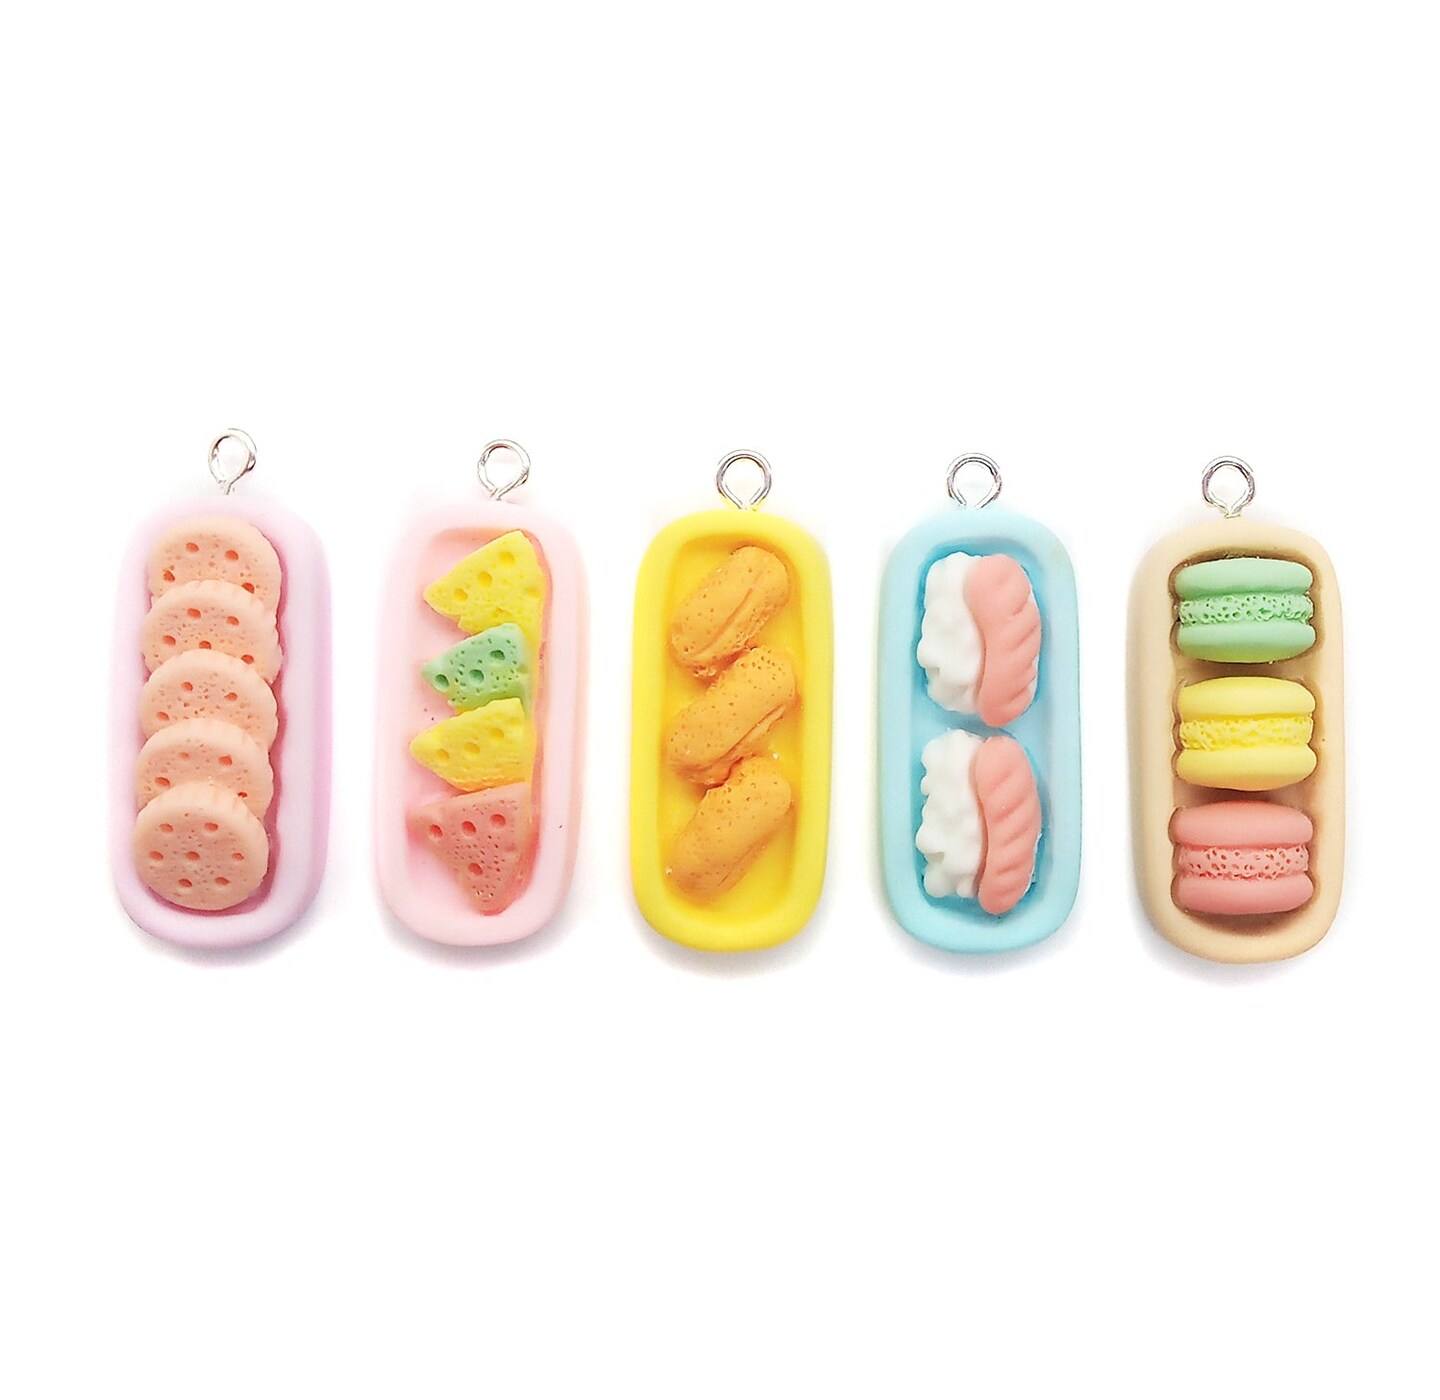 Kawaii Snack Foods Charms, set of 5 3D Miniature Pendants, Adorabilities